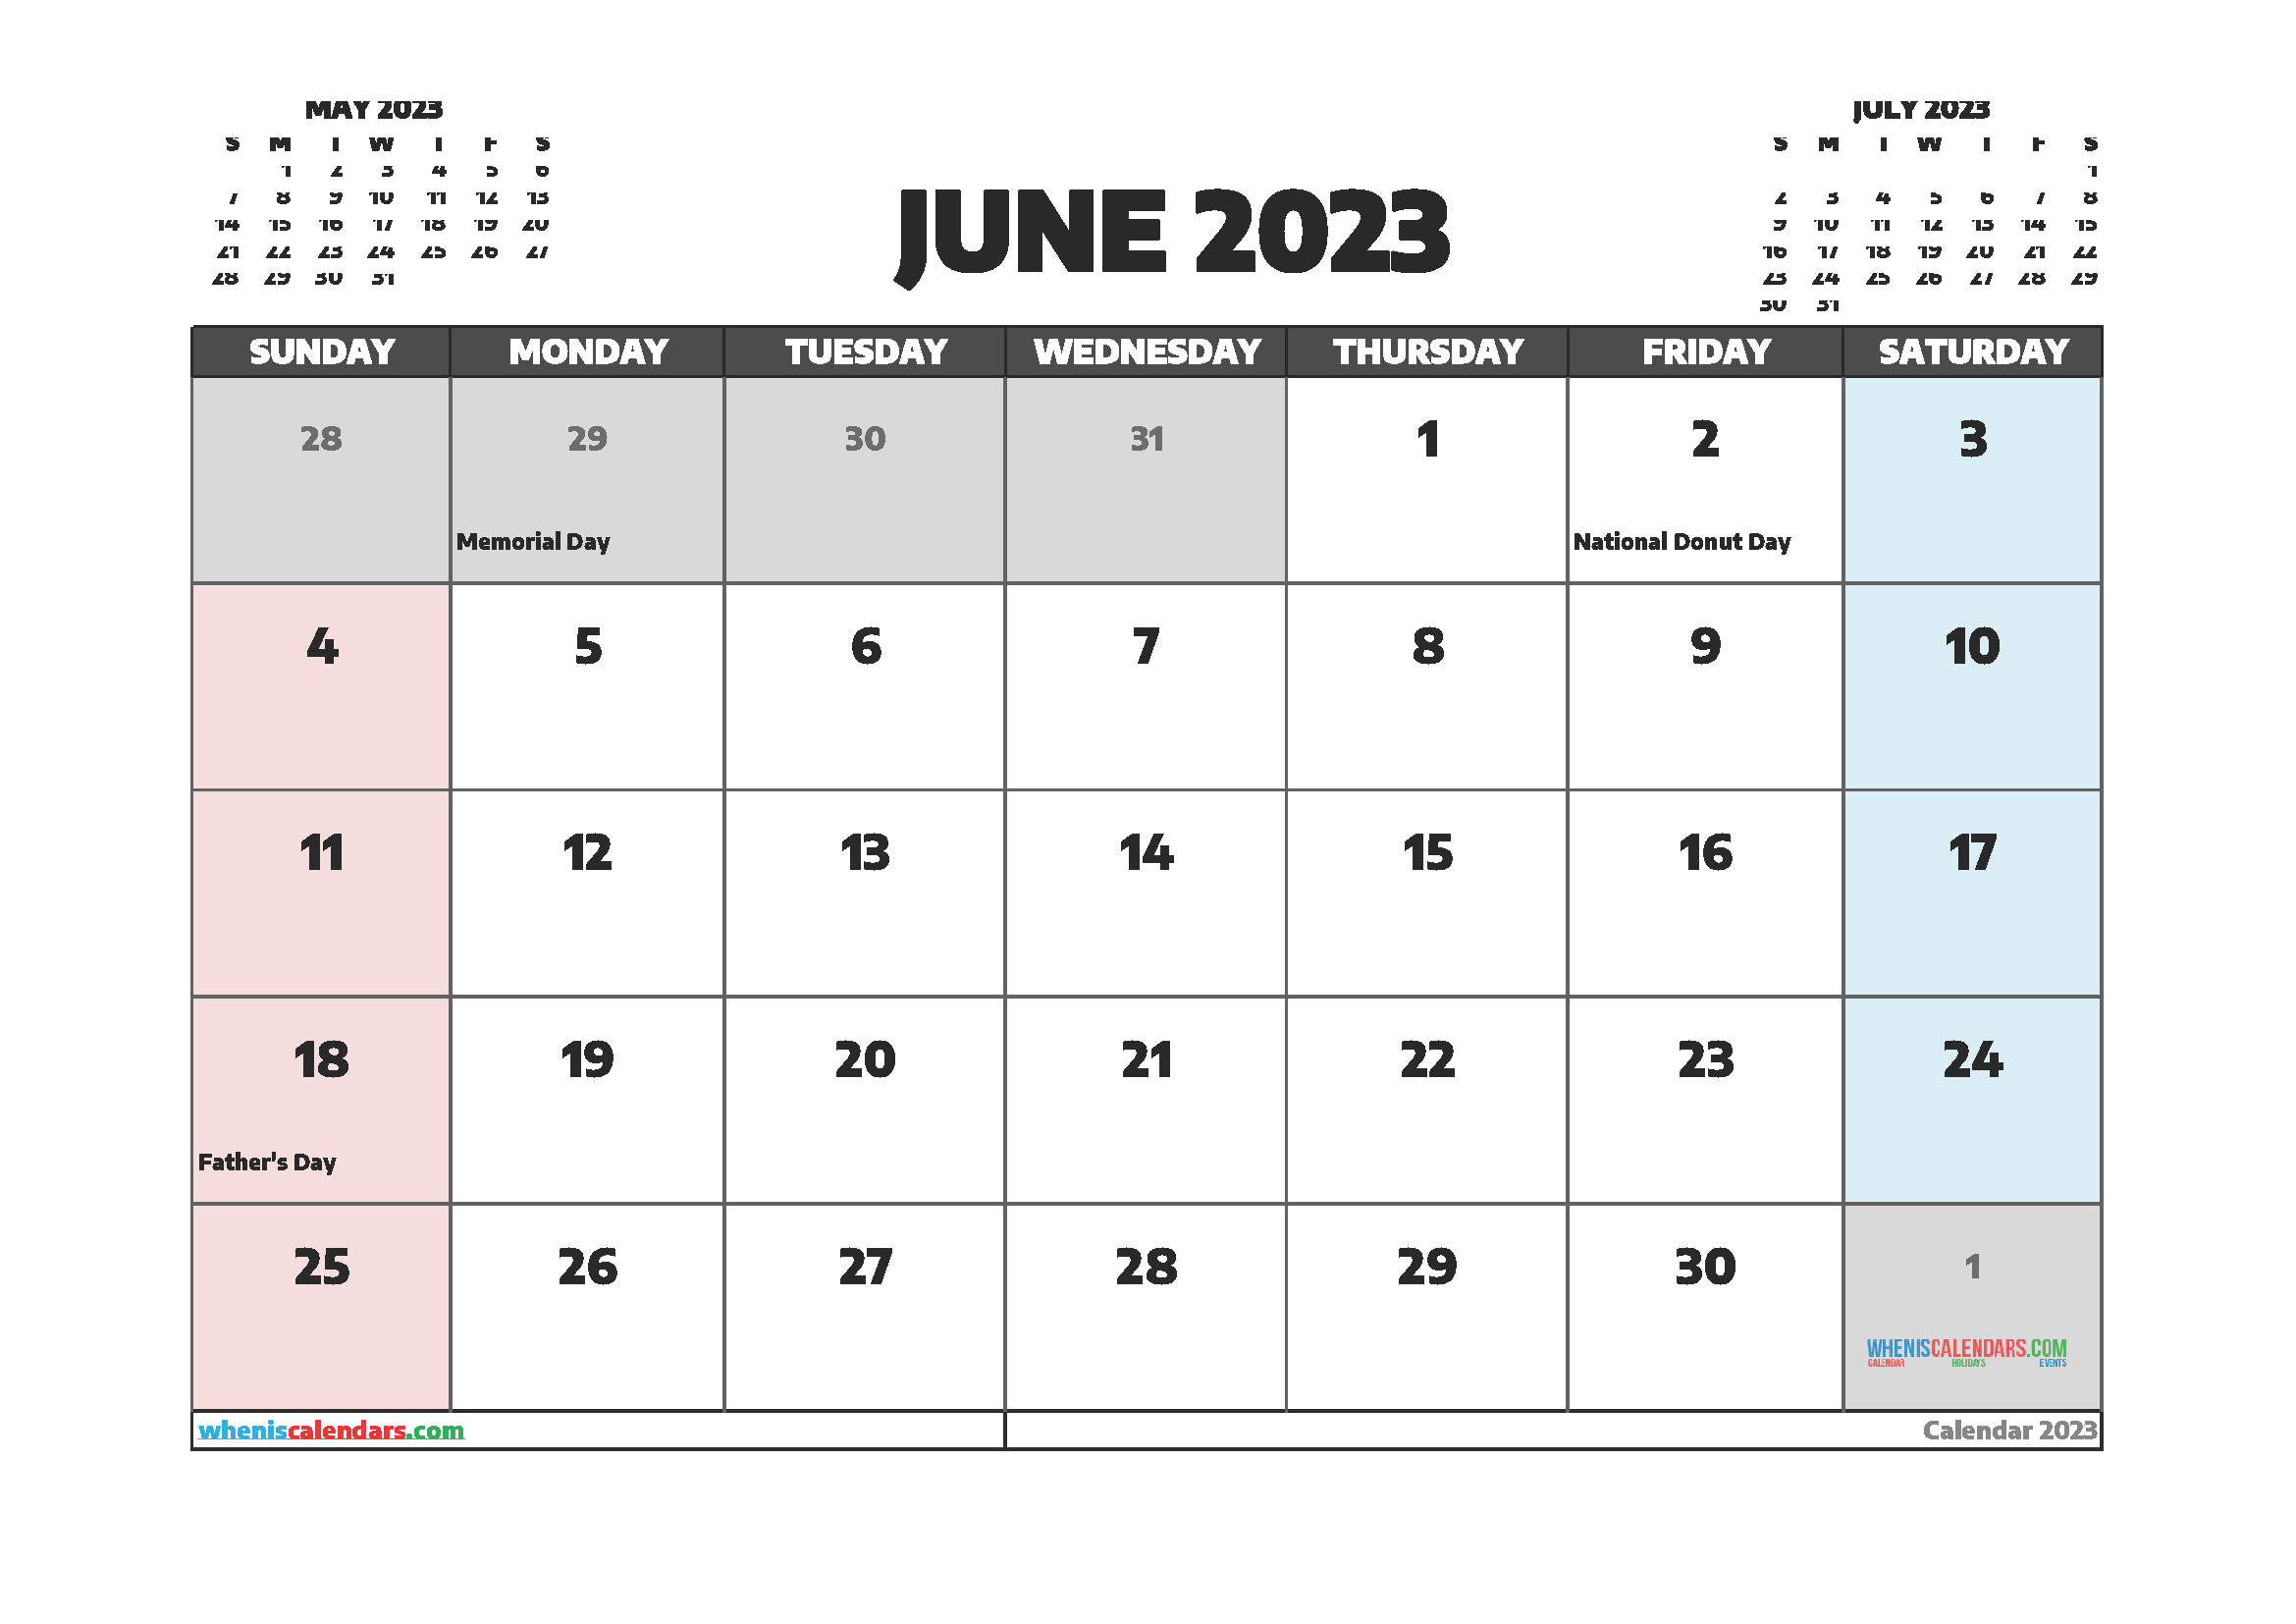 Monthly Calendar 2023 Printable 2023 Calendar